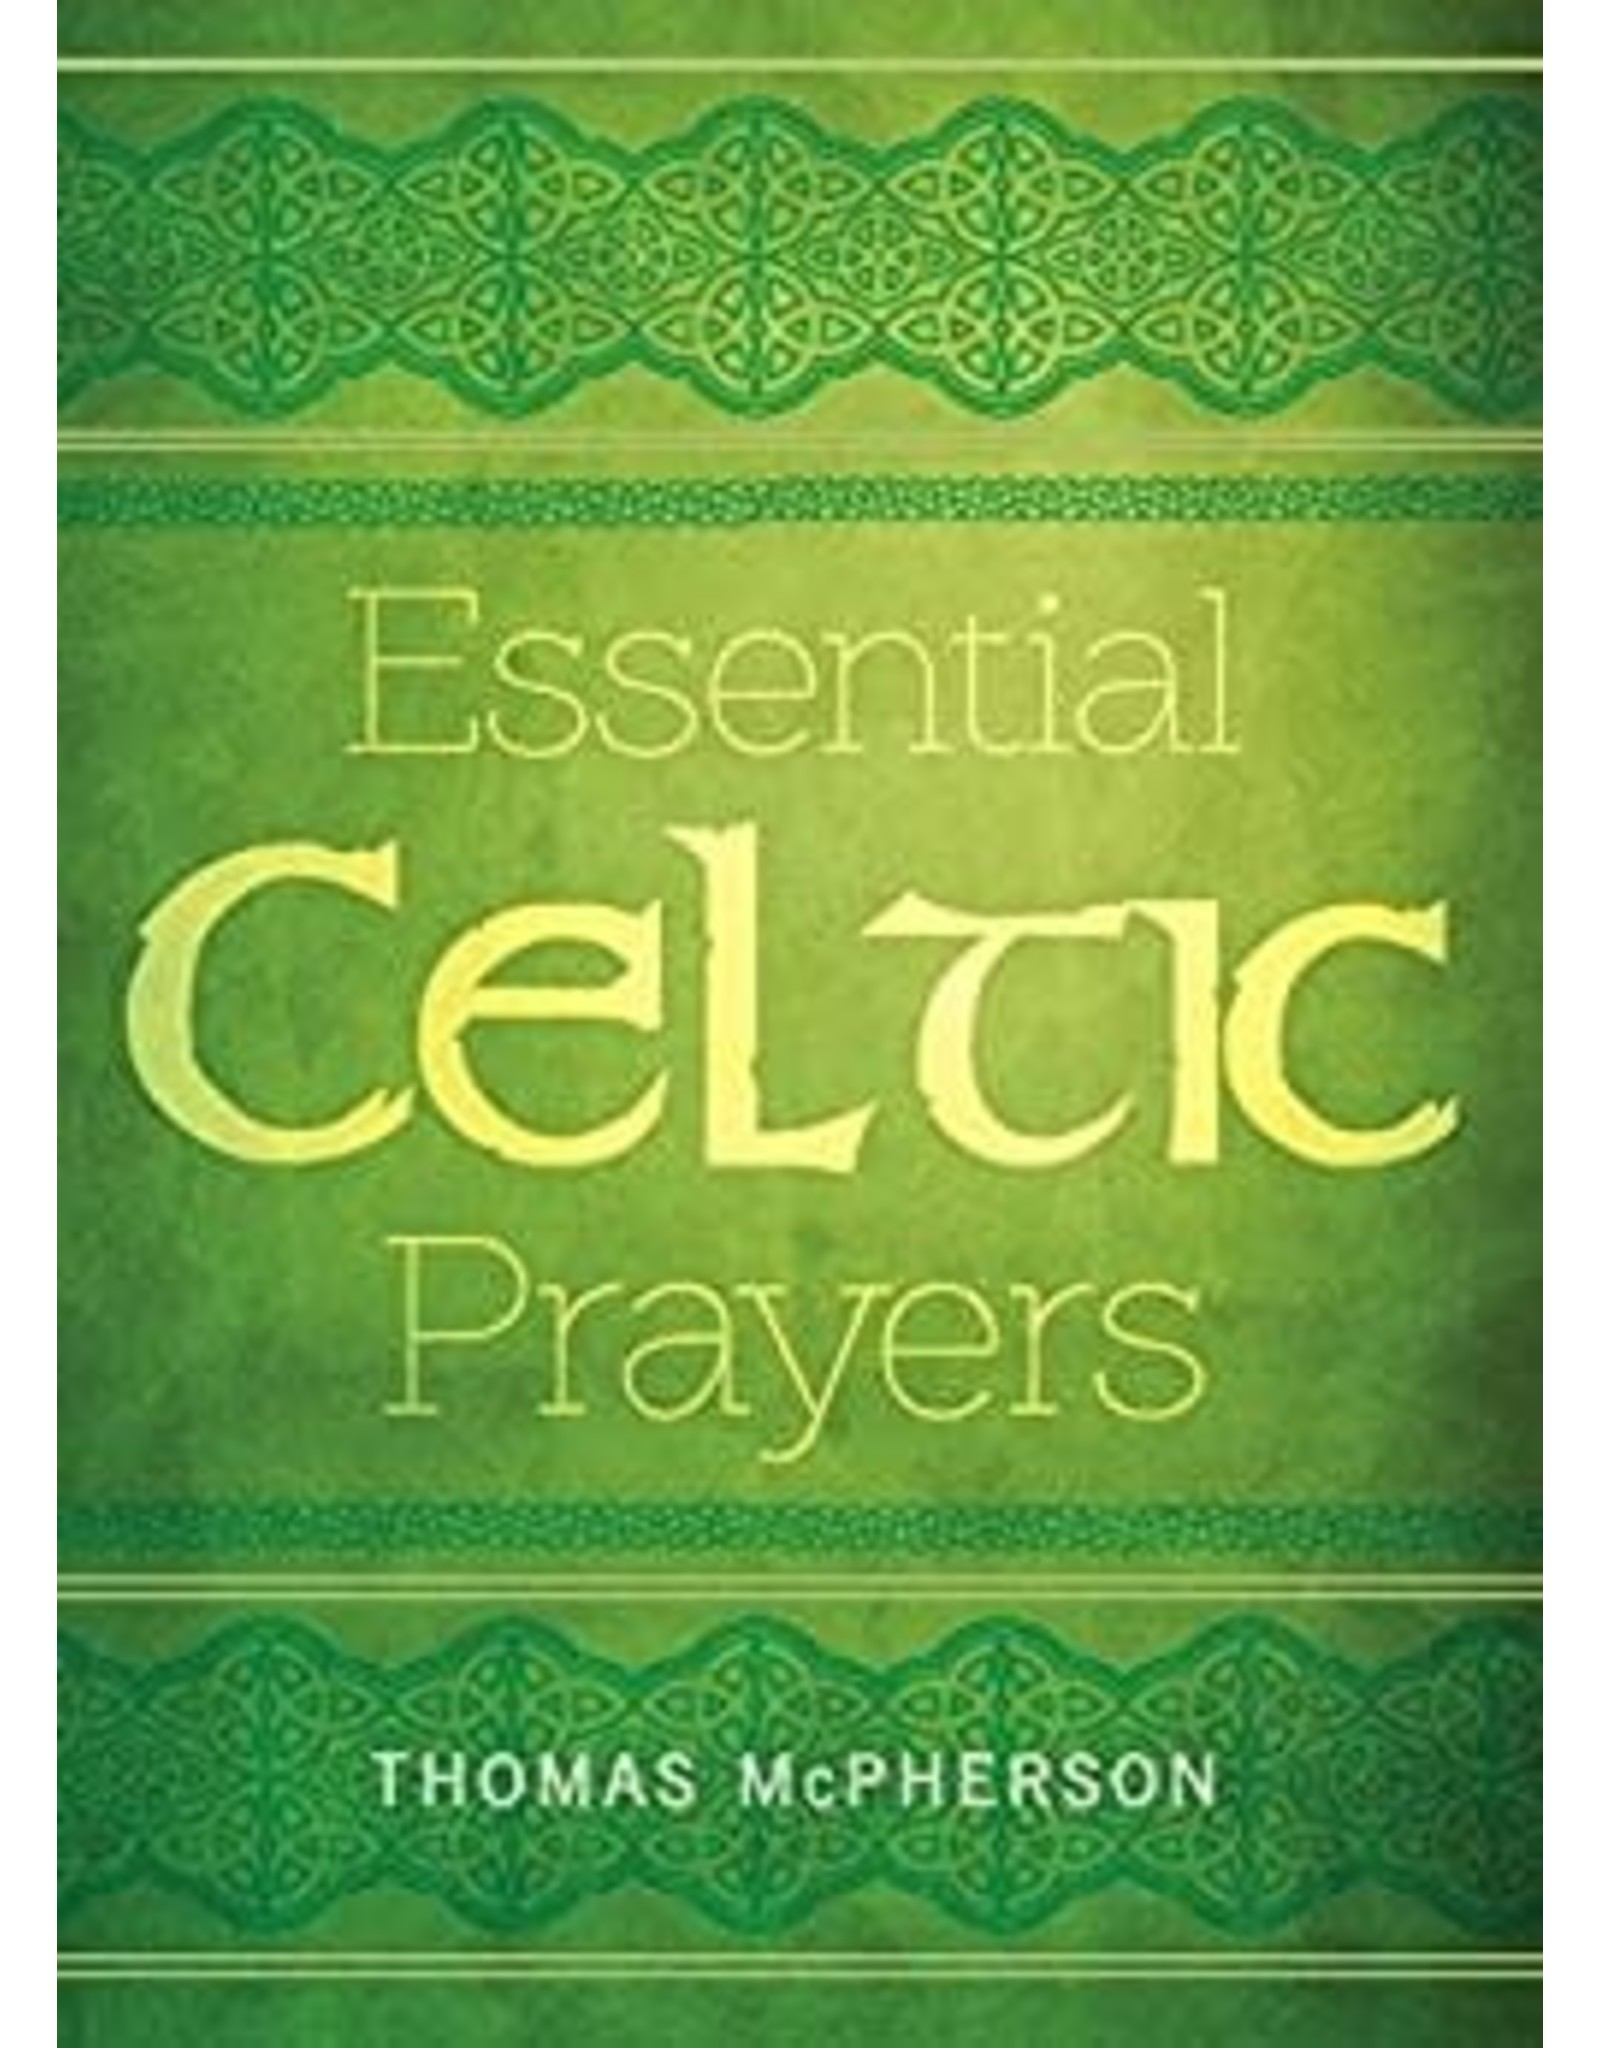 Paraclete Press Essential Celtic Prayers (Paperback)